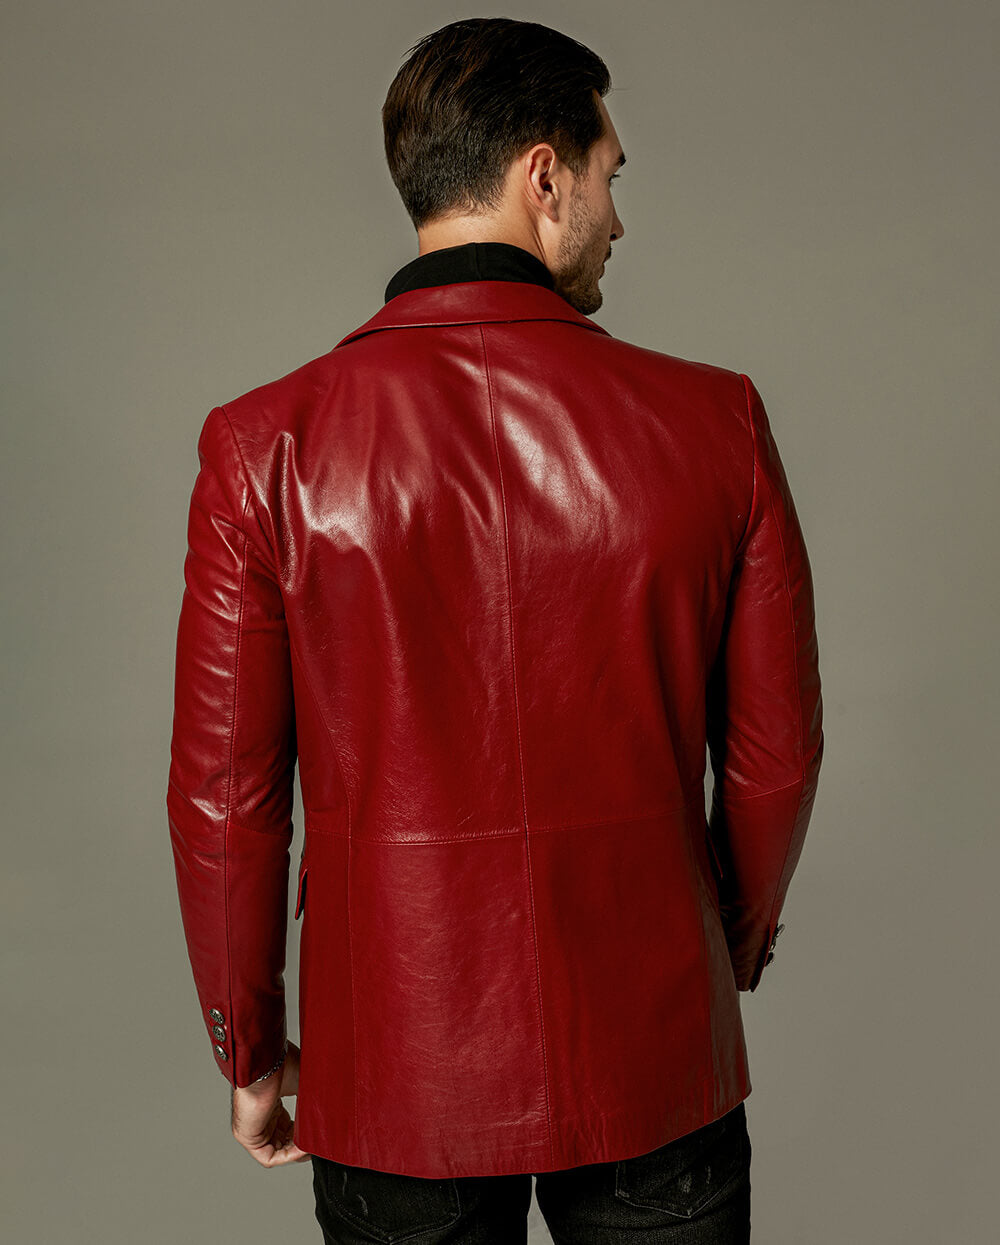 Palaleather Men's Two Button Leather Blazer Jacket